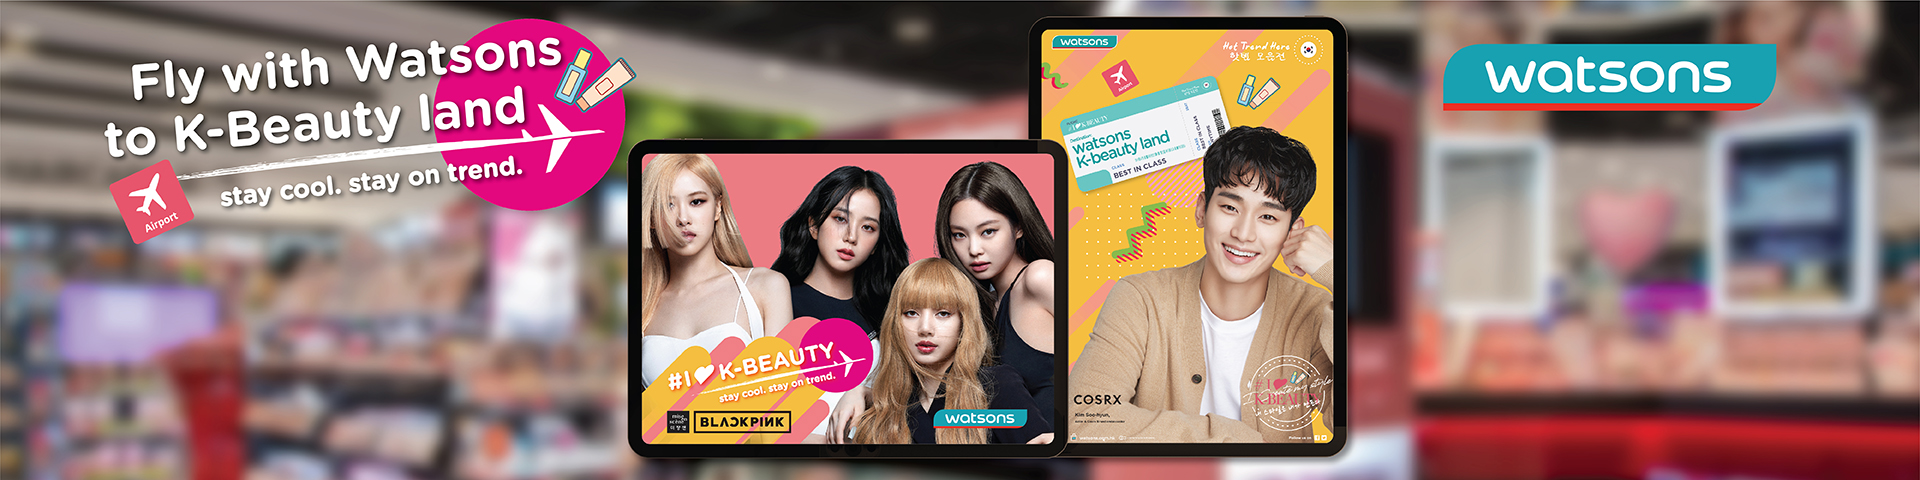 Watsons Develops Successful Partnership with K-Beauty Brands Mise En Scène and COSRX in Asia